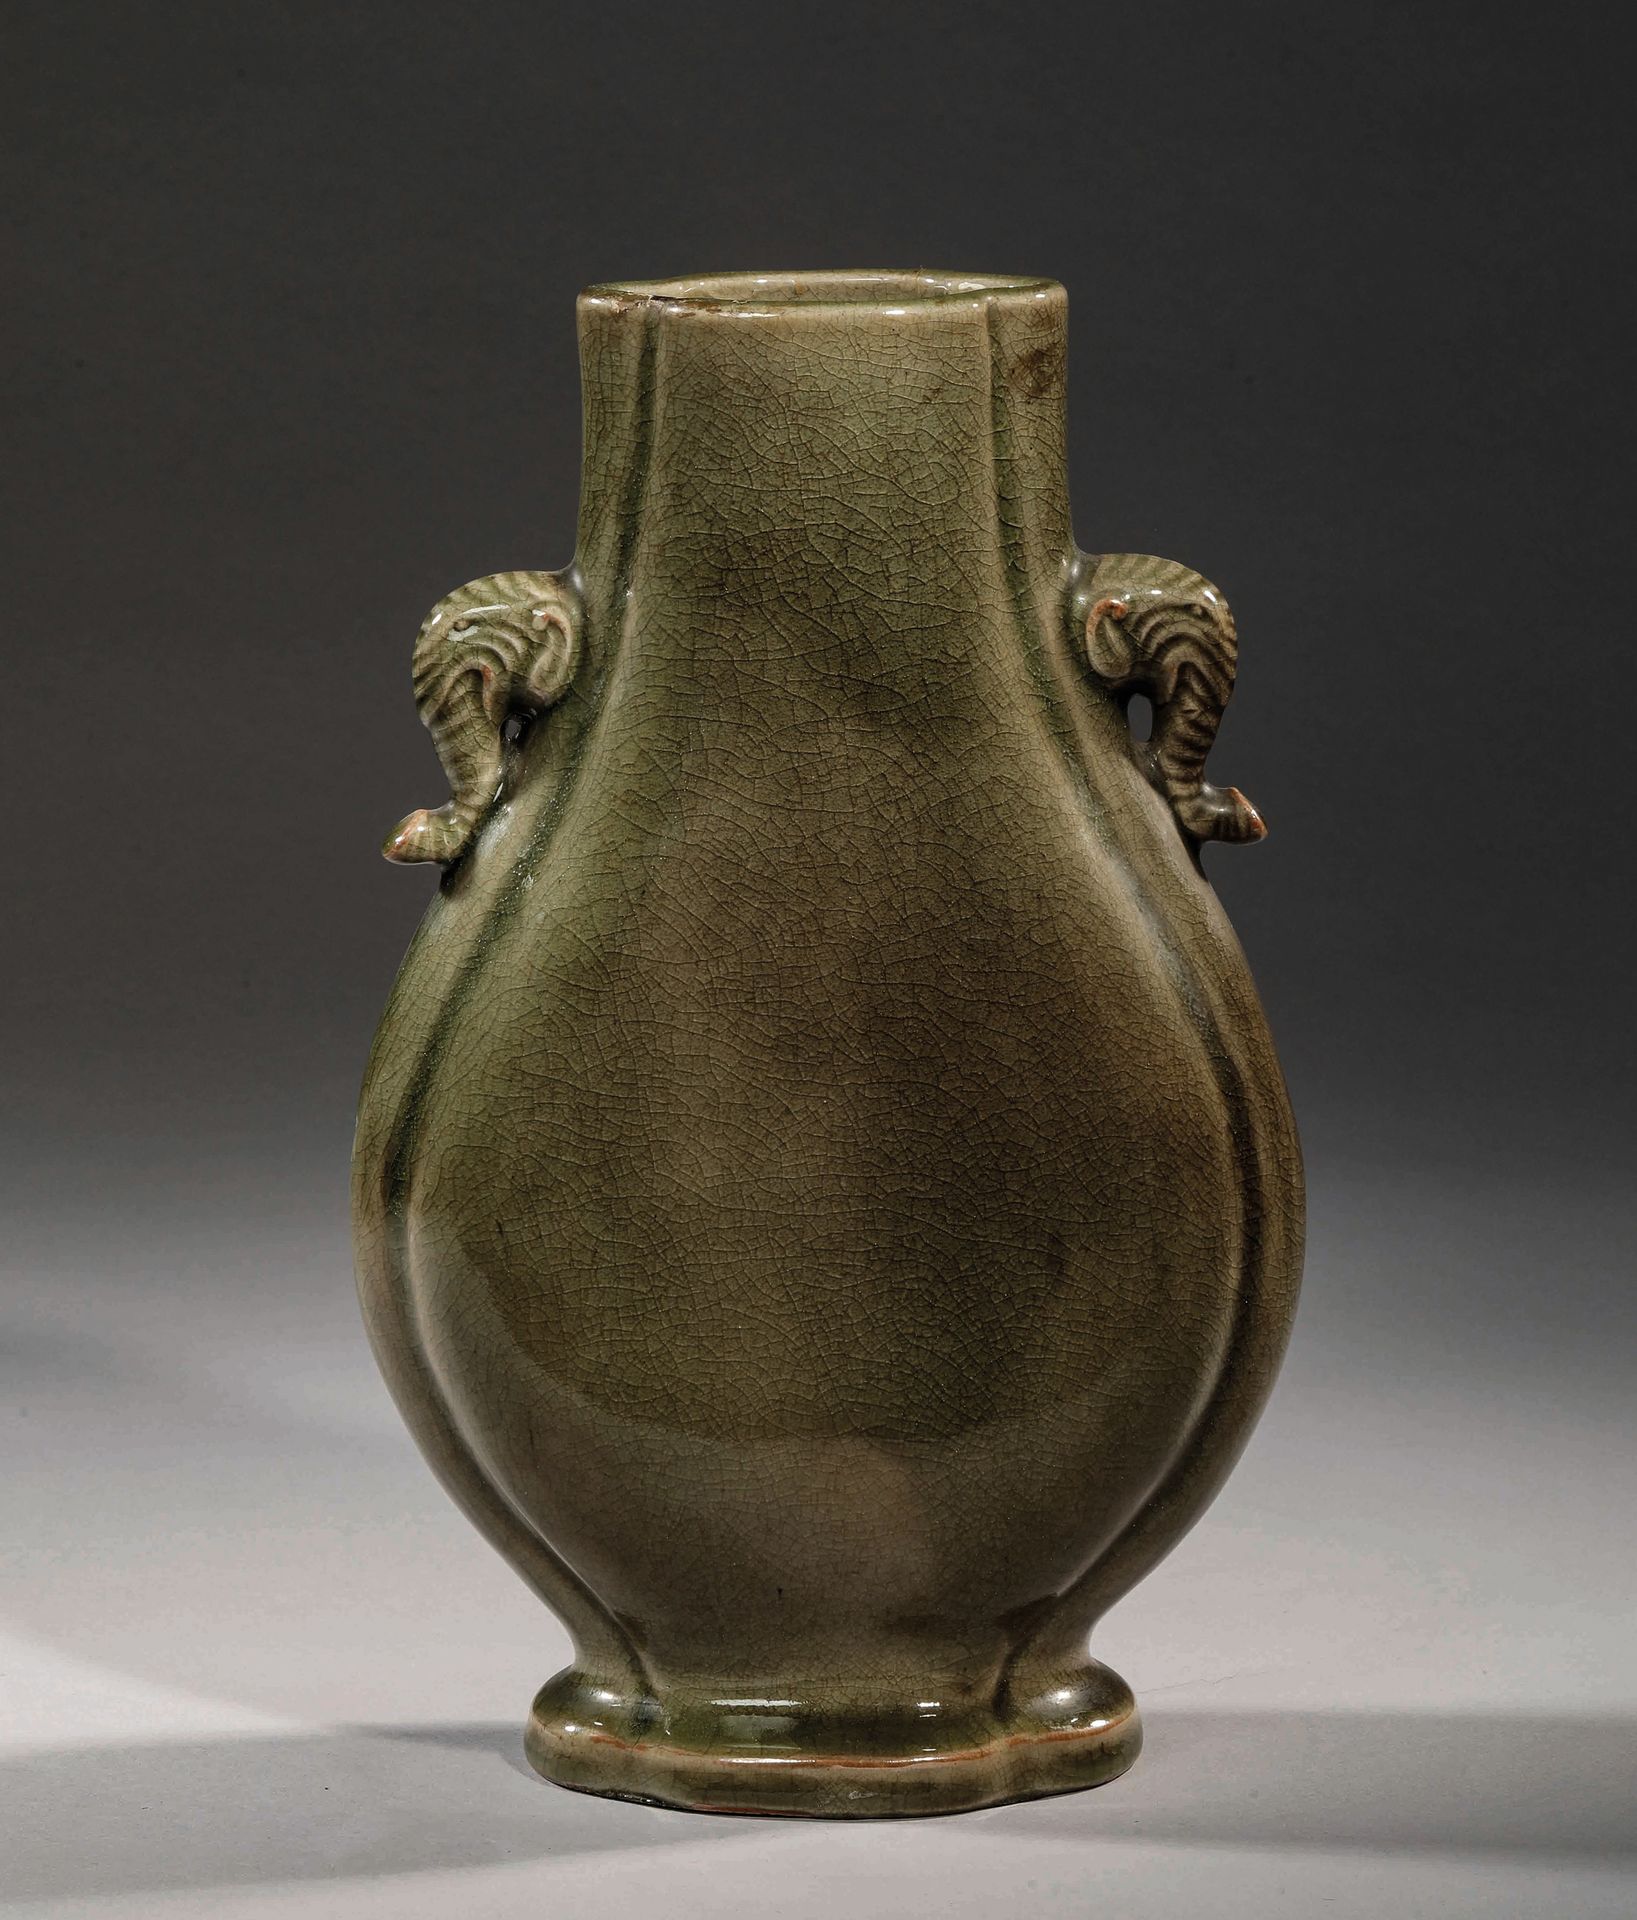 Null 青花瓷的花瓶。
带大象手柄。
中国 清 19世纪
(脖子上的芯片)
H.31厘米